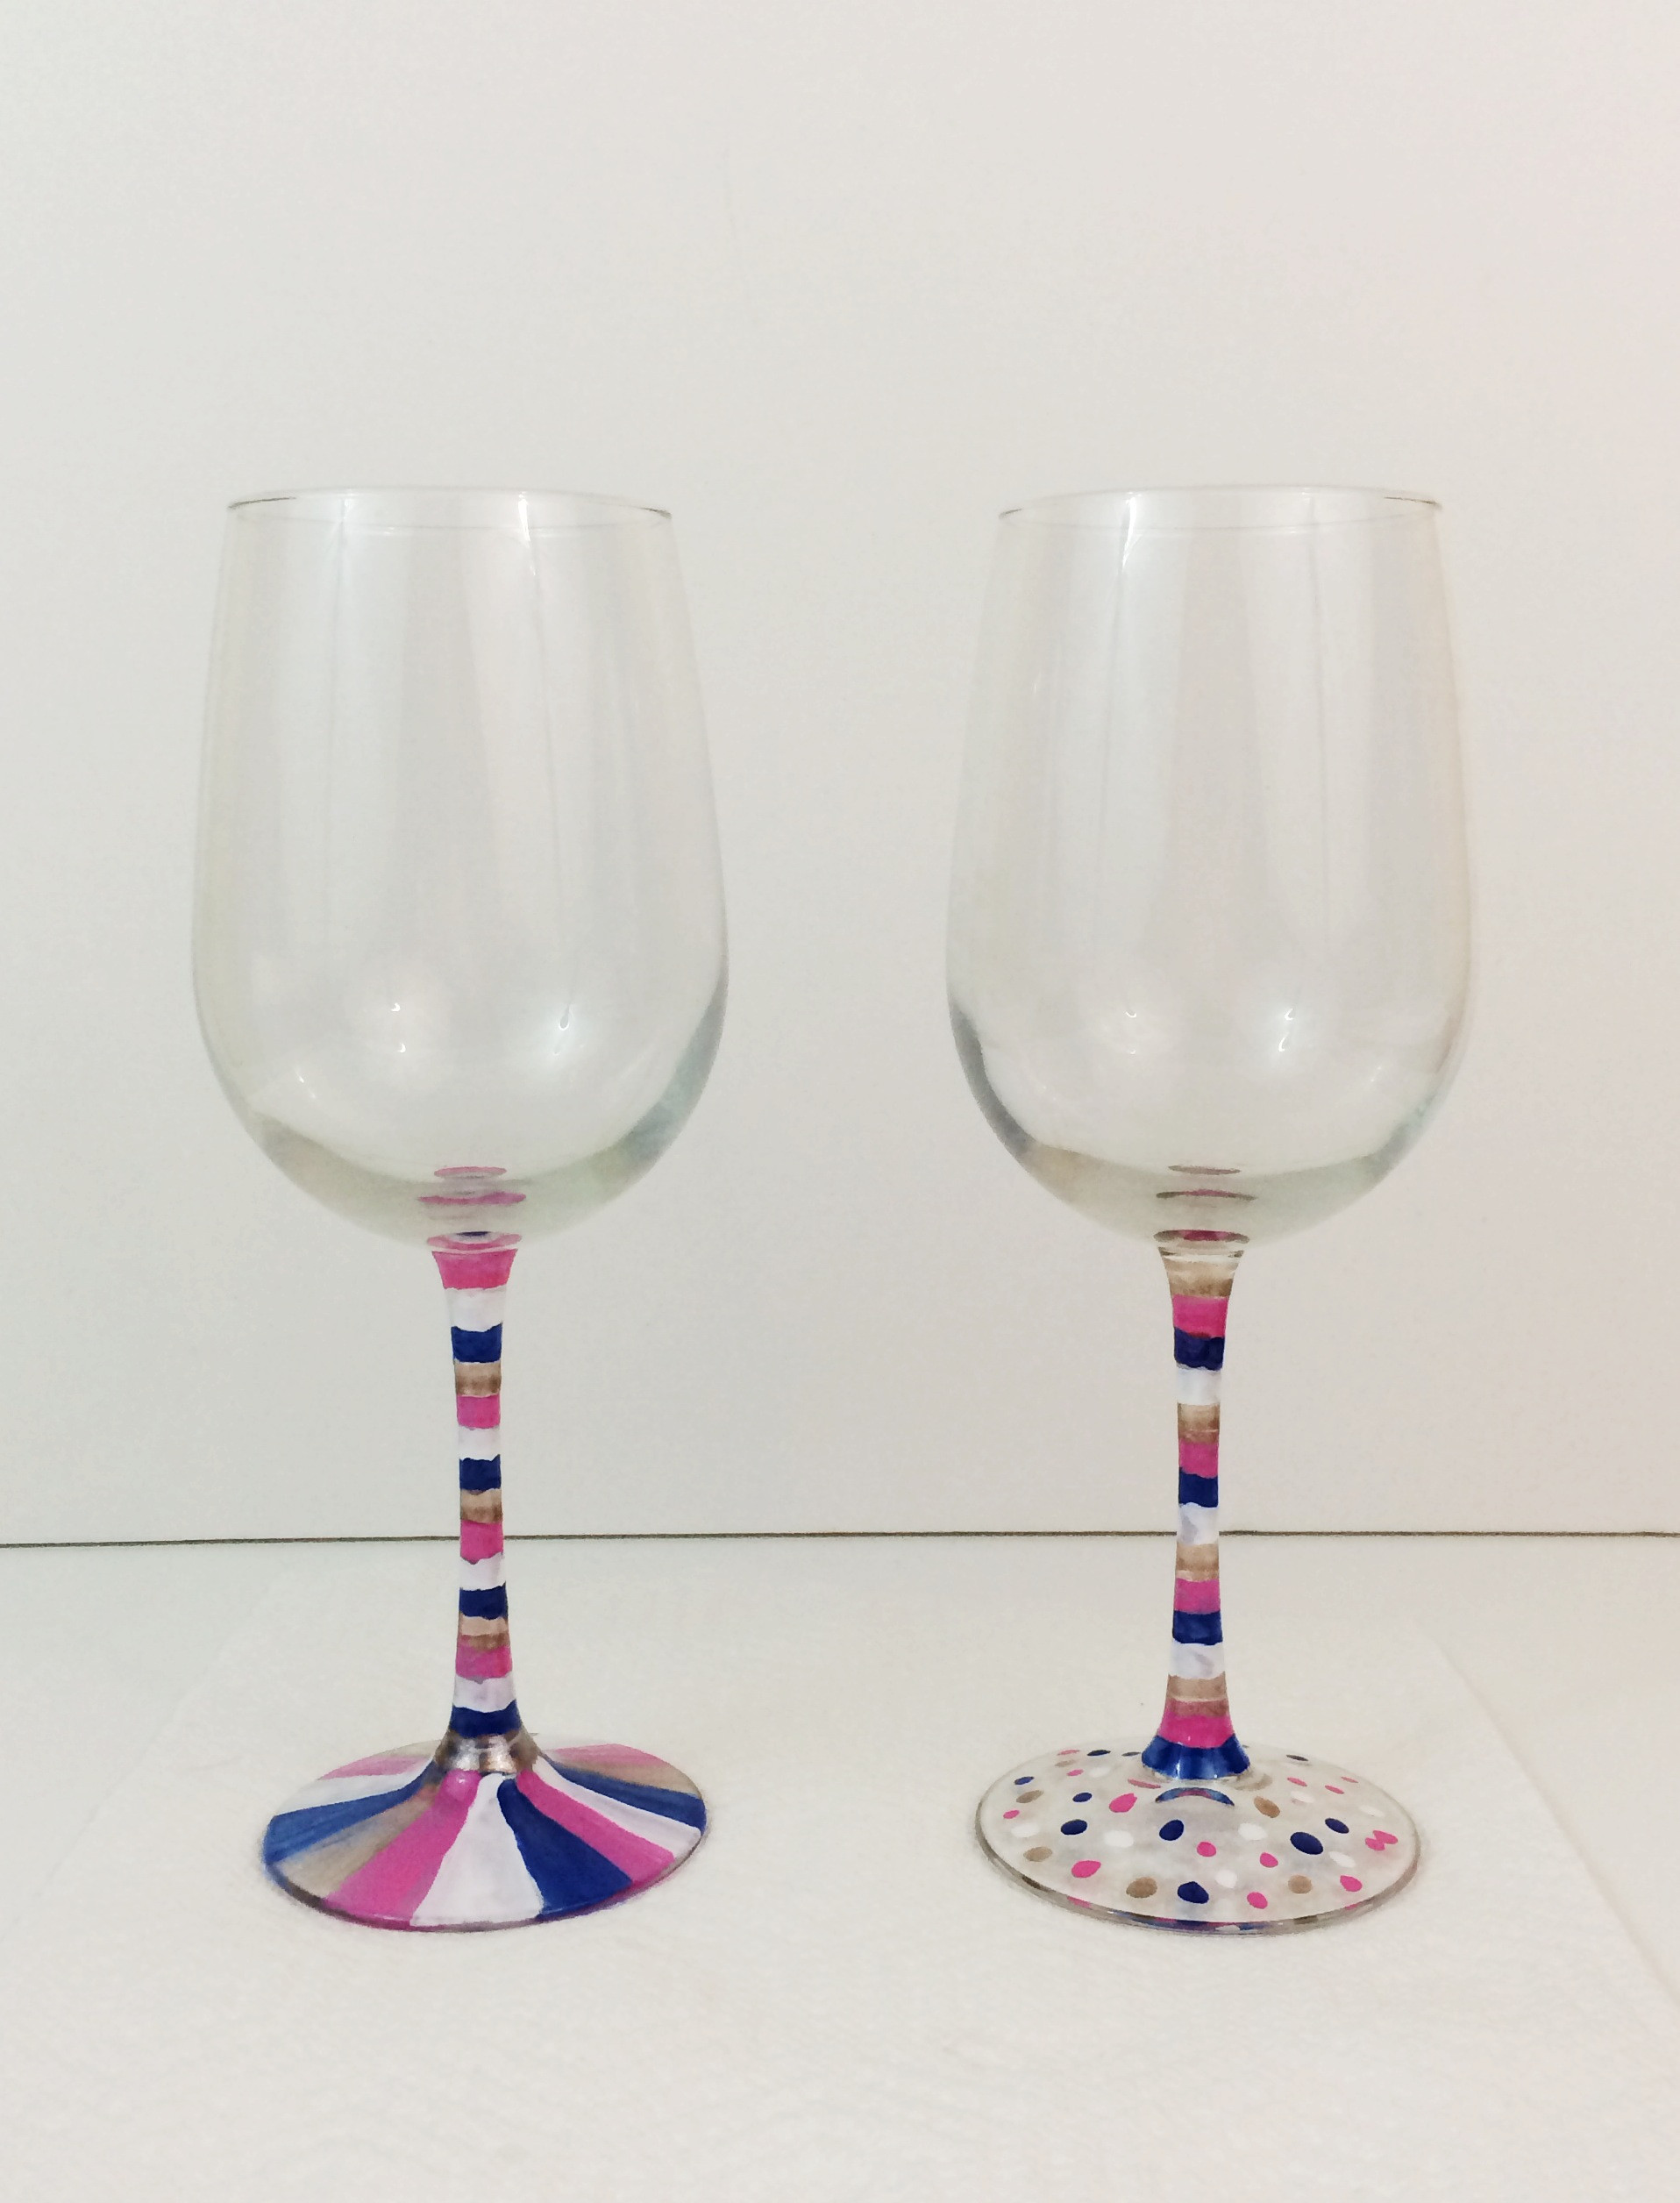 DIY Decorative Wine Glasses
 EASY WINE GLASS DECORATING DIY